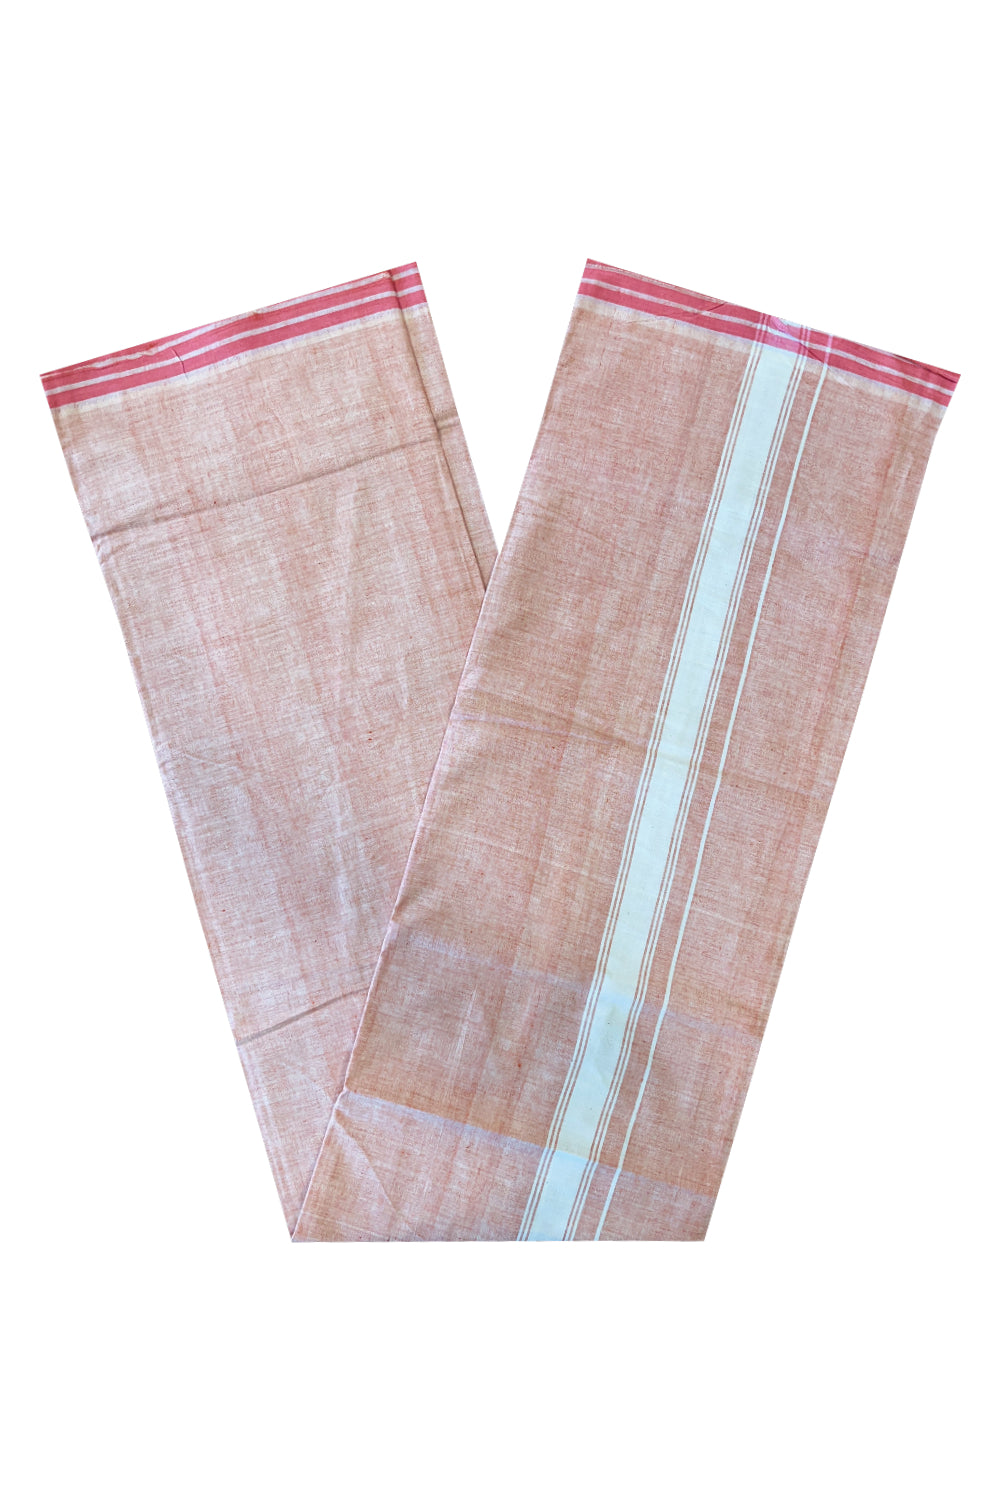 Southloom Premium Handloom Red Shaded Solid Single Mundu (Lungi) with White Border